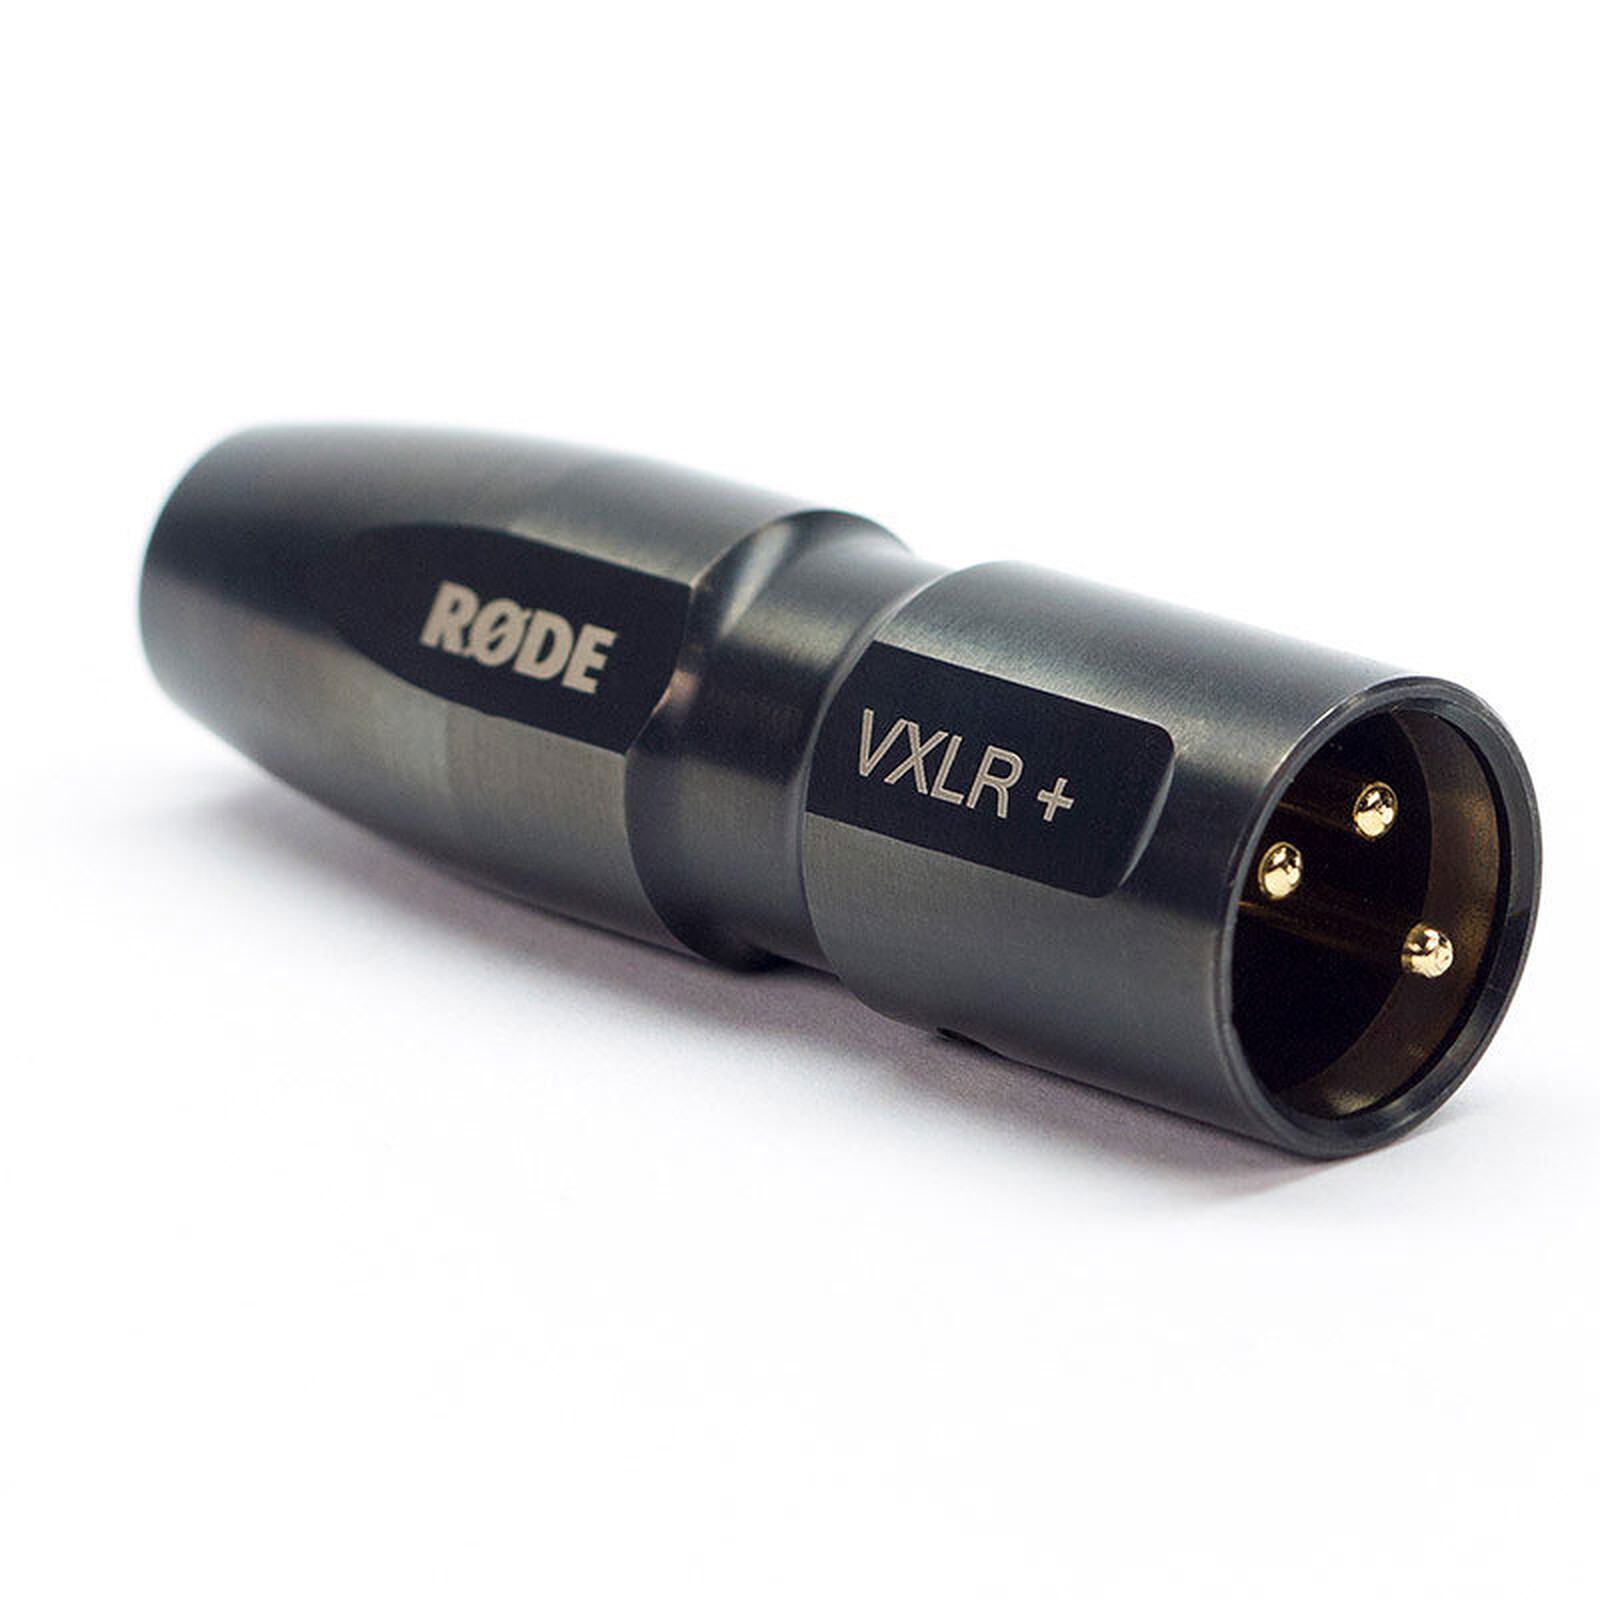 RODE VXLR+ - Adaptateur audio - Garantie 3 ans LDLC